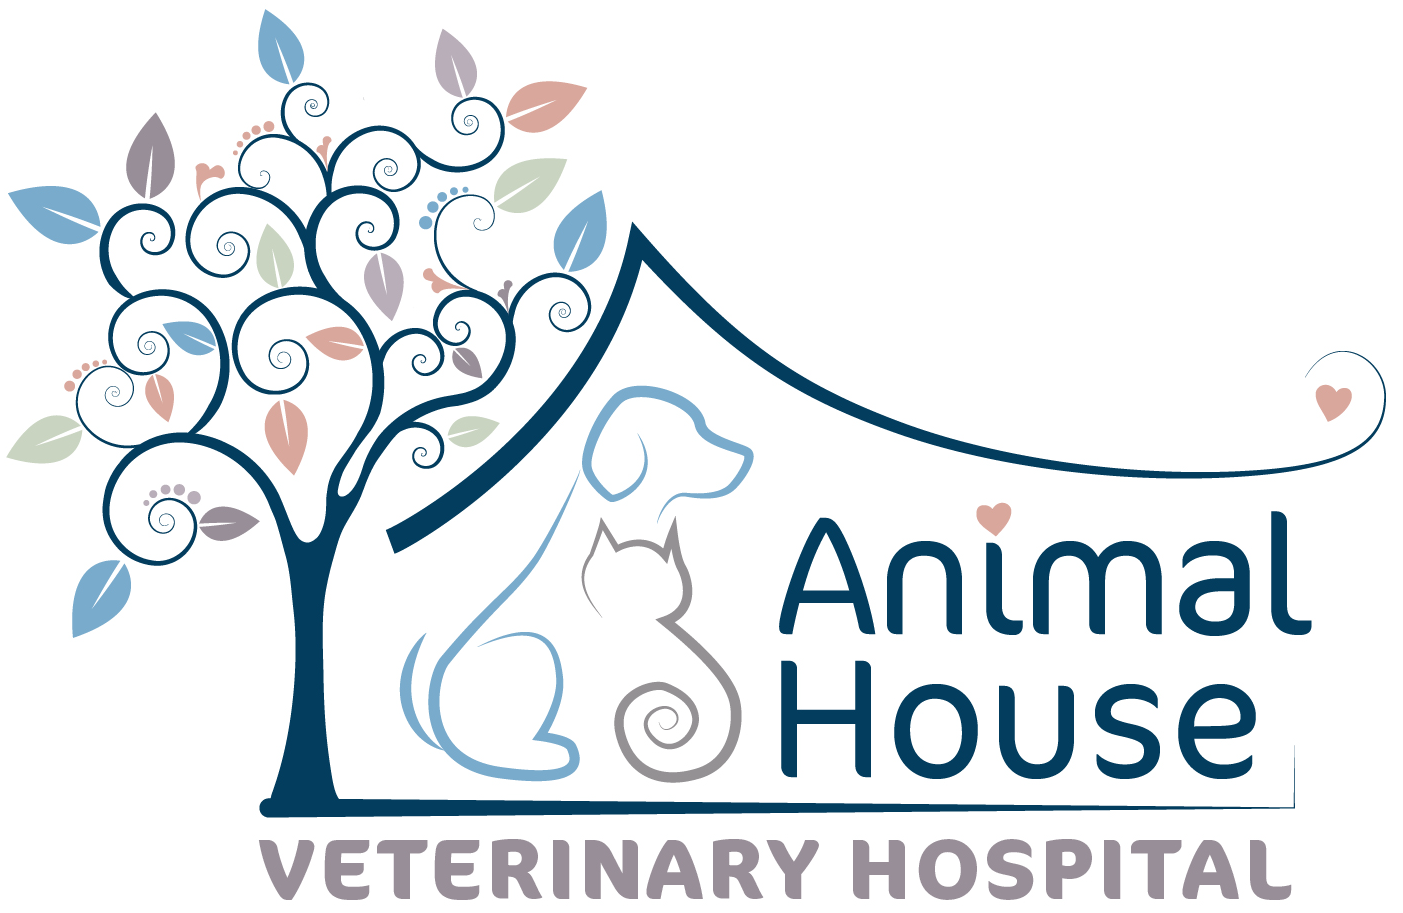 Animal House Veterinary Hospital